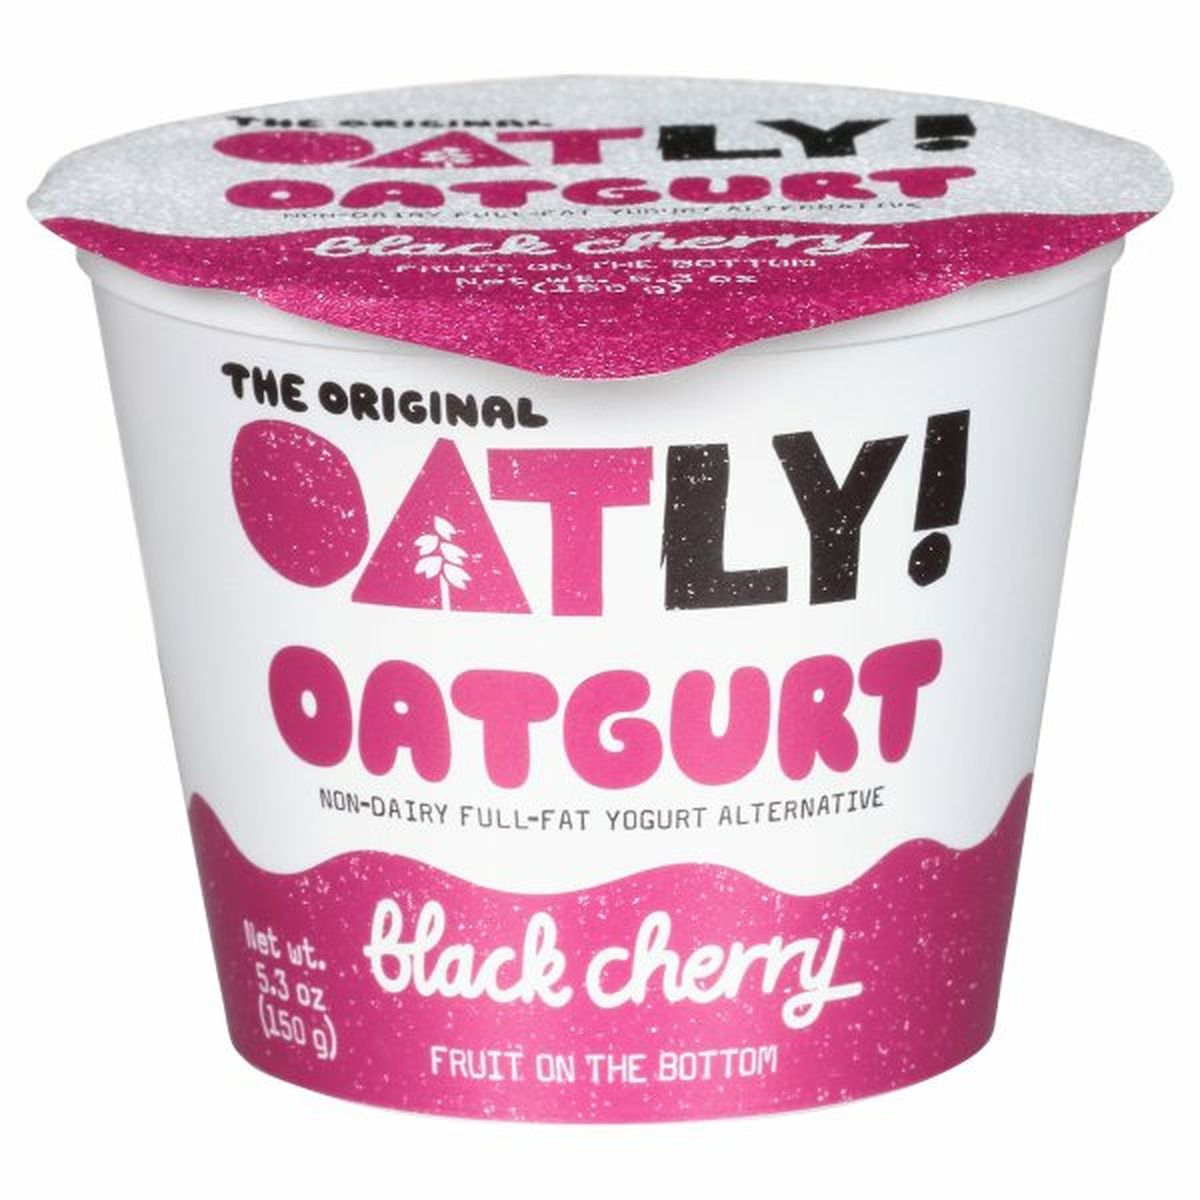 Calories in Oatly Oatgurt, Black Cherry